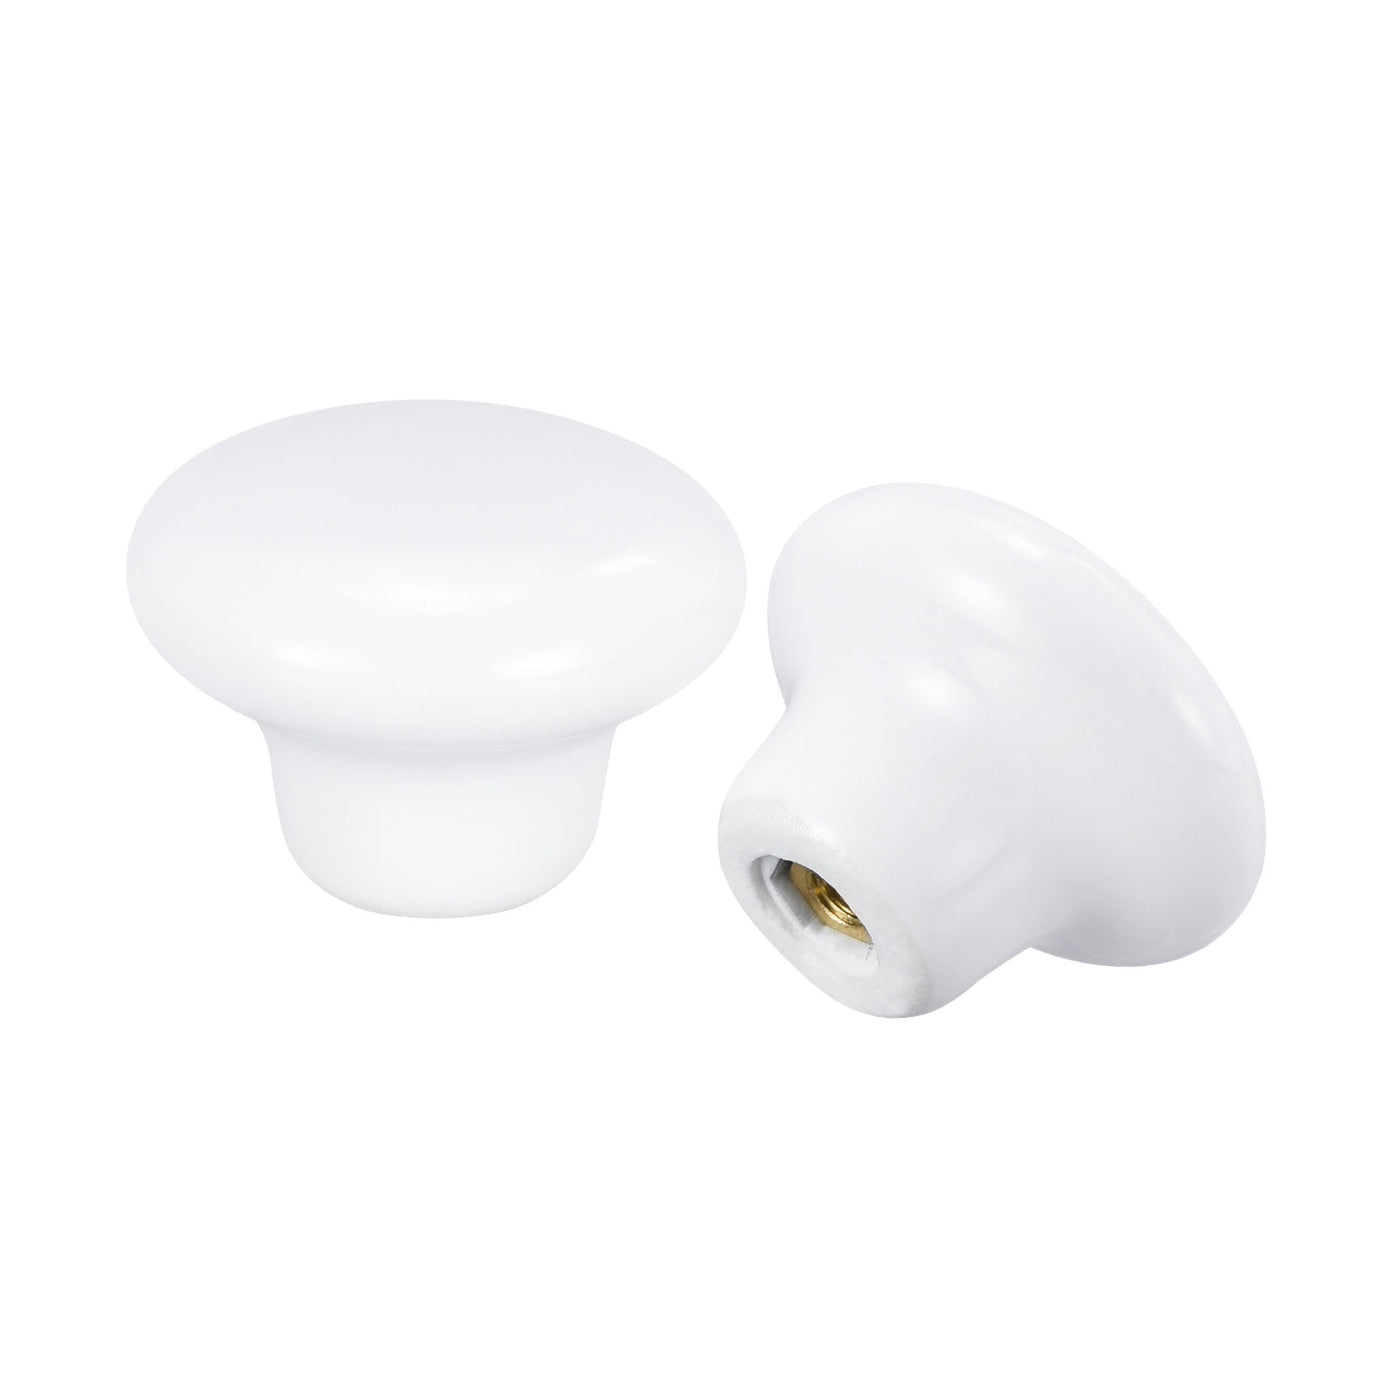 uxcell Uxcell 32x24mm Ceramic Drawer Knobs, 15pcs Mushroom Shape Door Pull Handles White